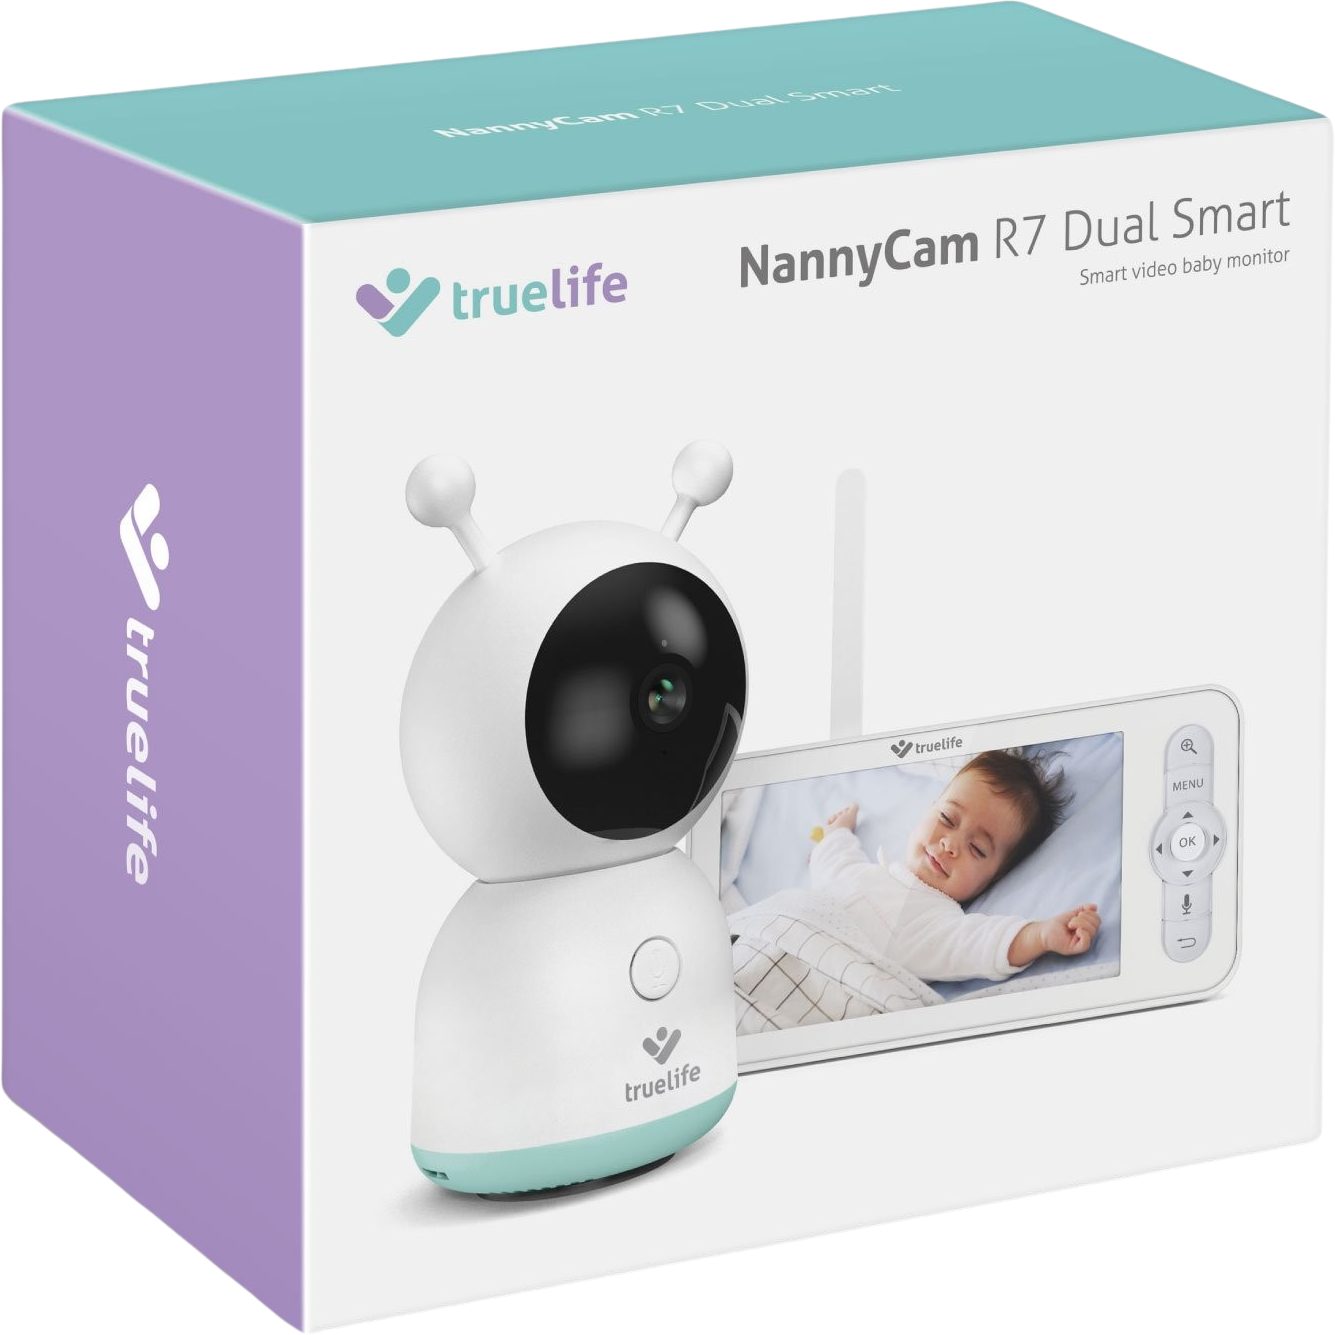 TrueLife NannyCam R7 Dual Smart Videopestúnka